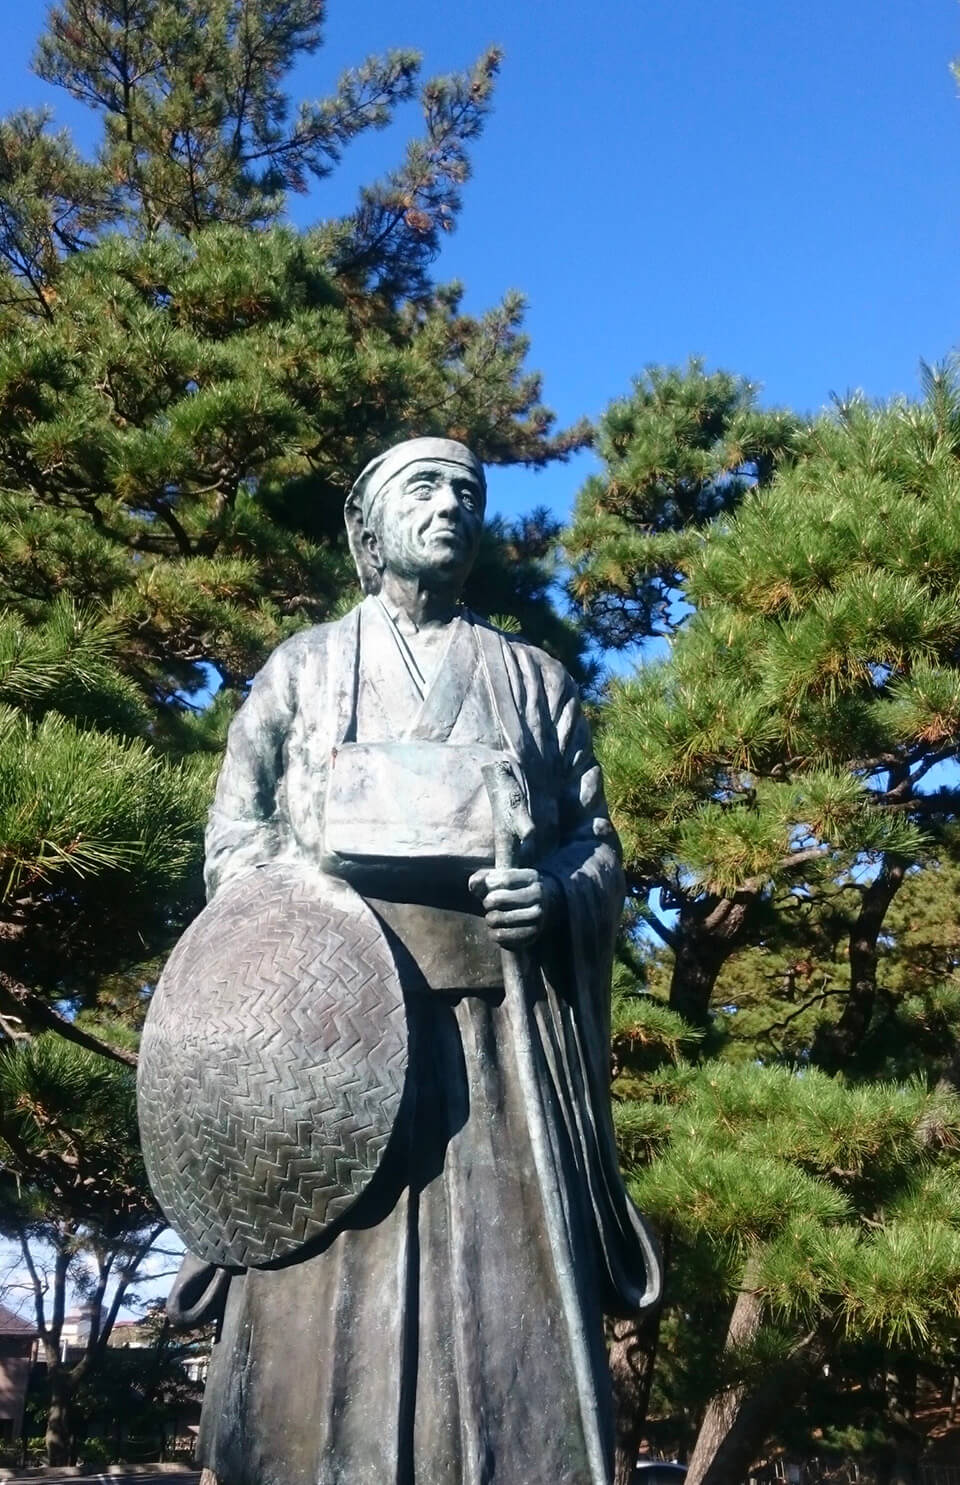 Basho engraved haiku rocks and statues